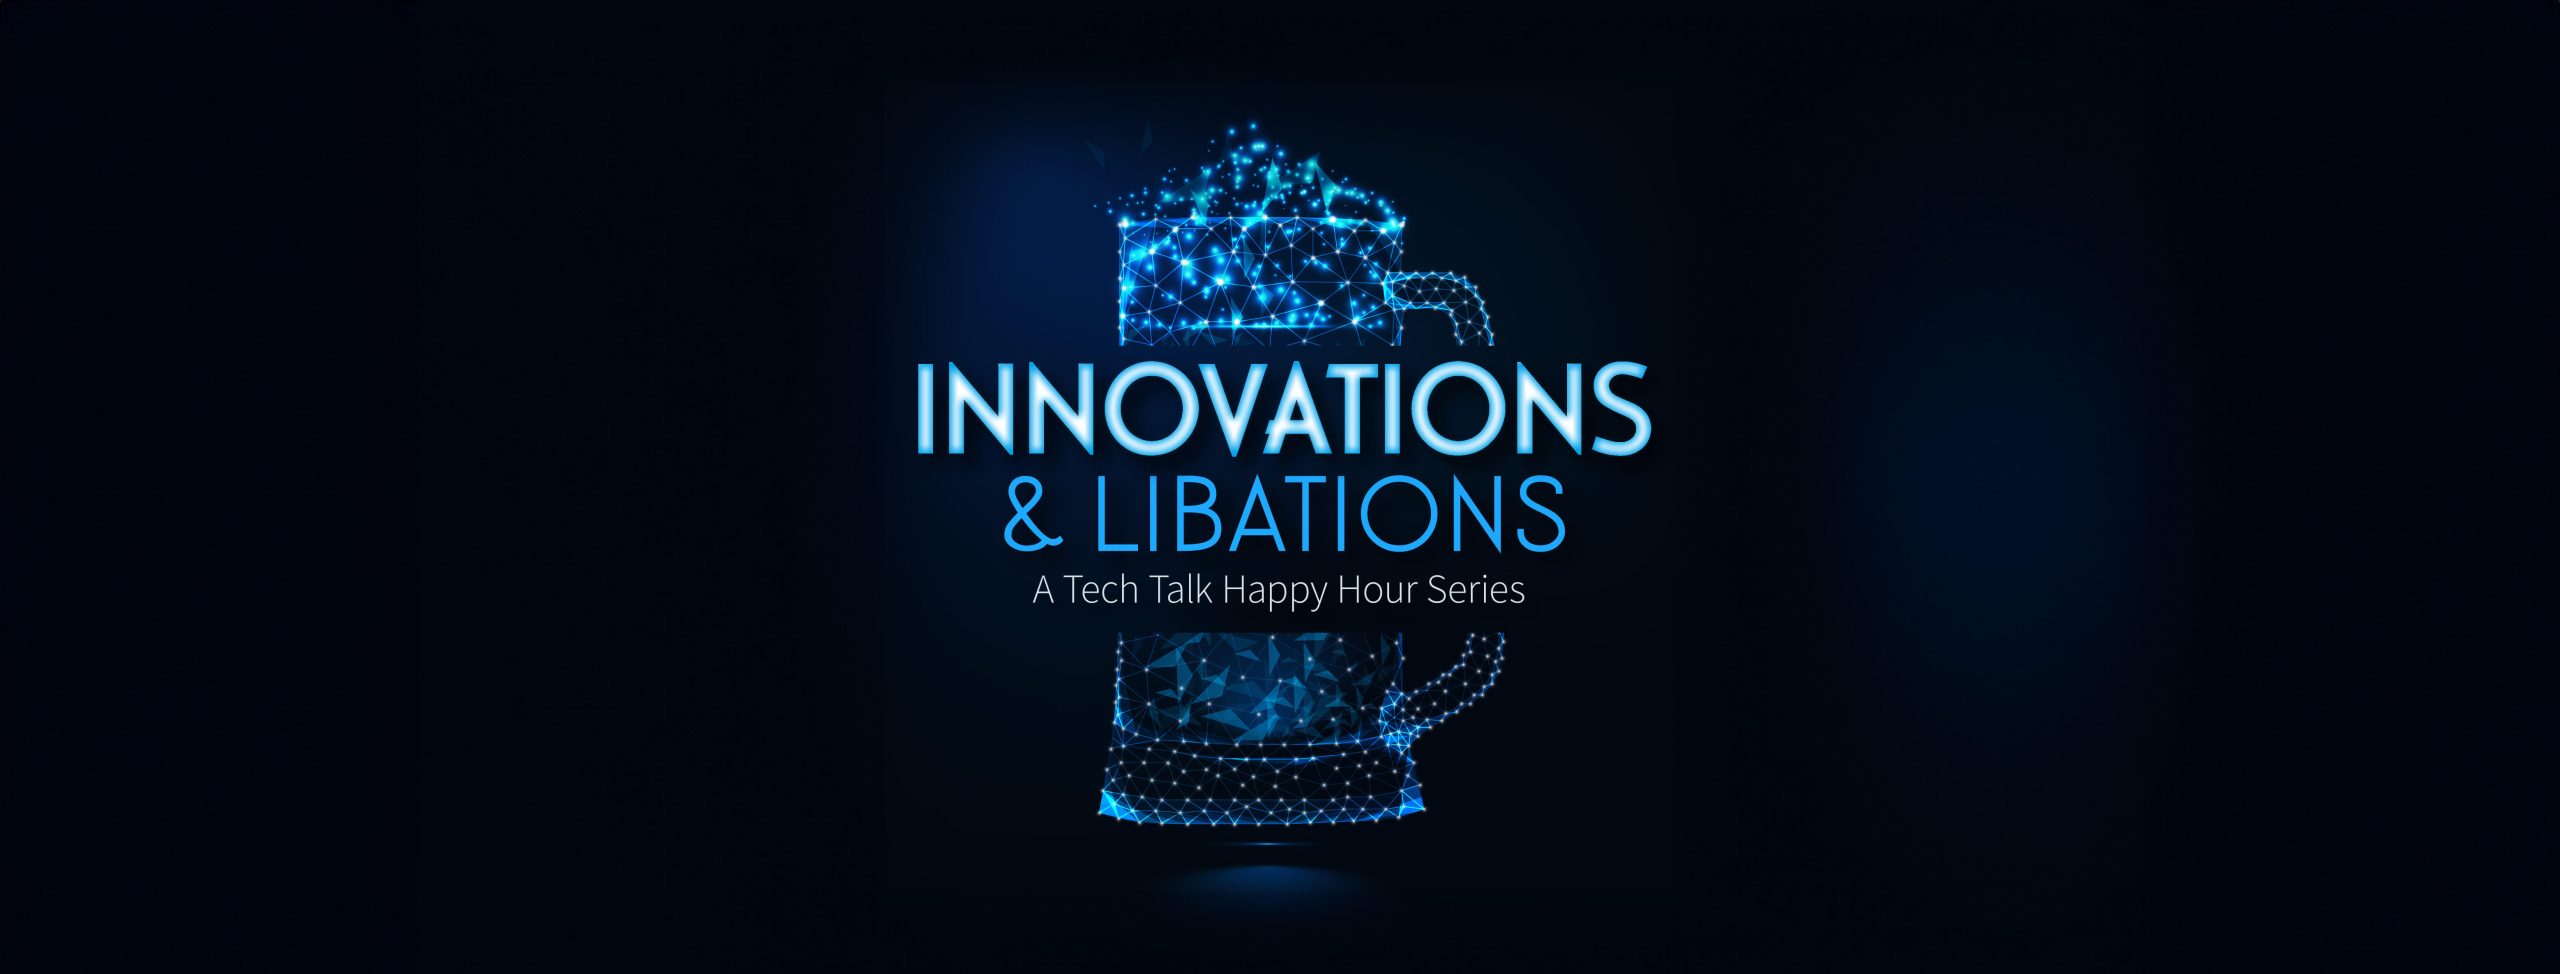 Innovations & Libations Tech Talk Happy Hour Series